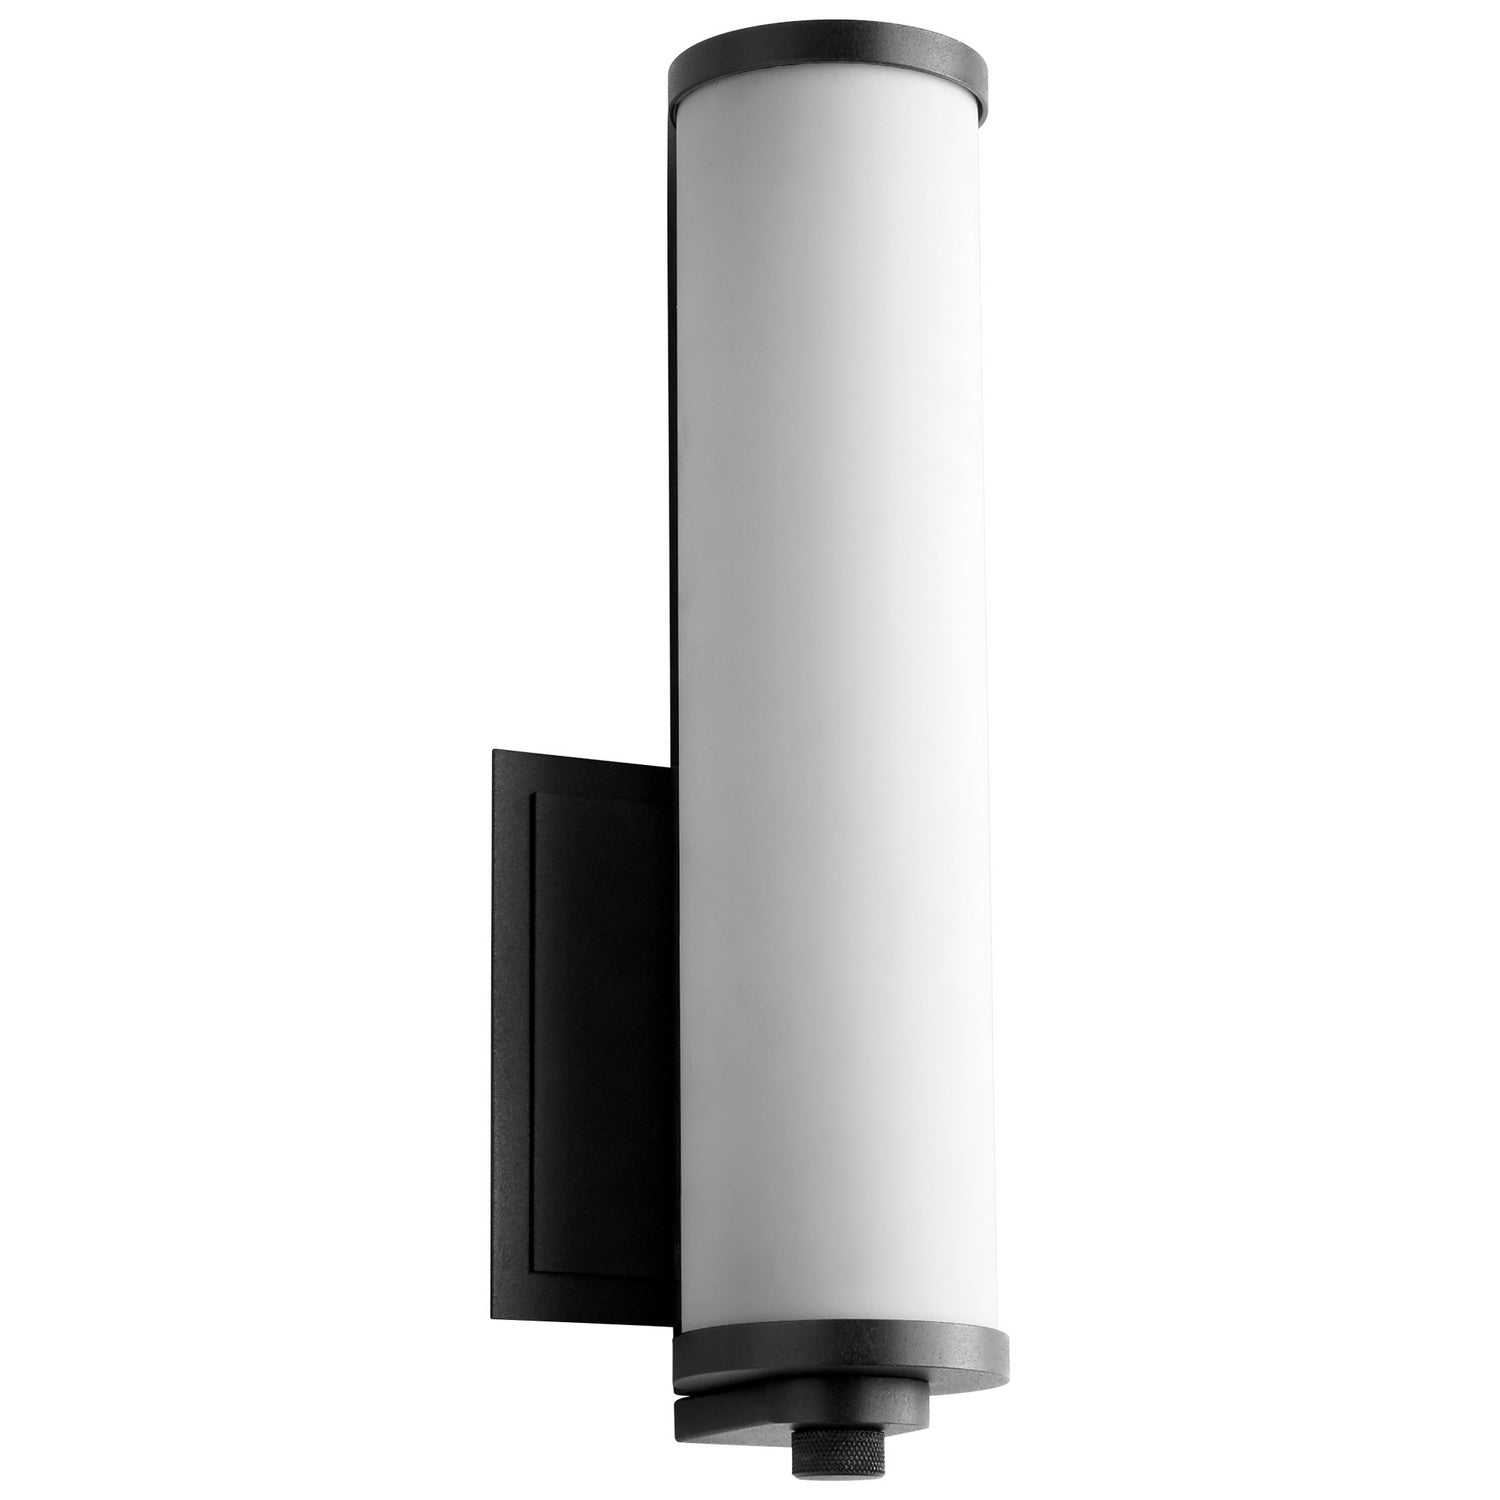 Oxygen Tempus 3-5000-15 Cylinder Wall Sconce Light Fixture - Black